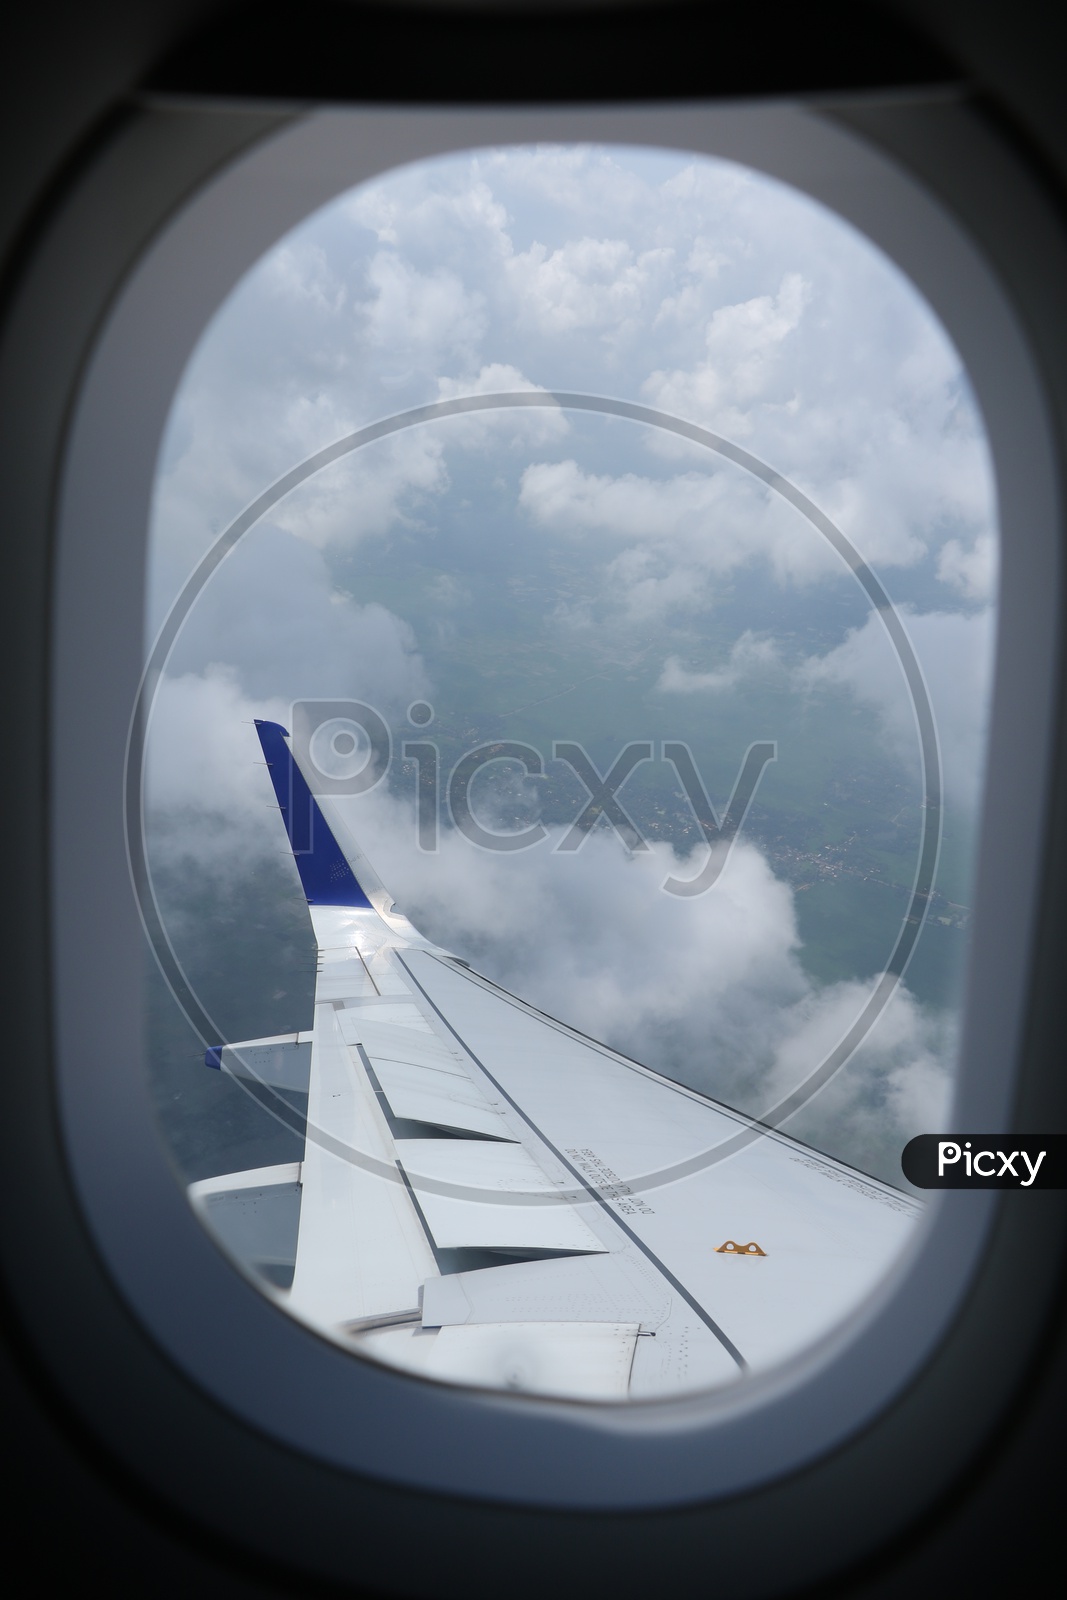 Beautiful Clouds captured from flight window